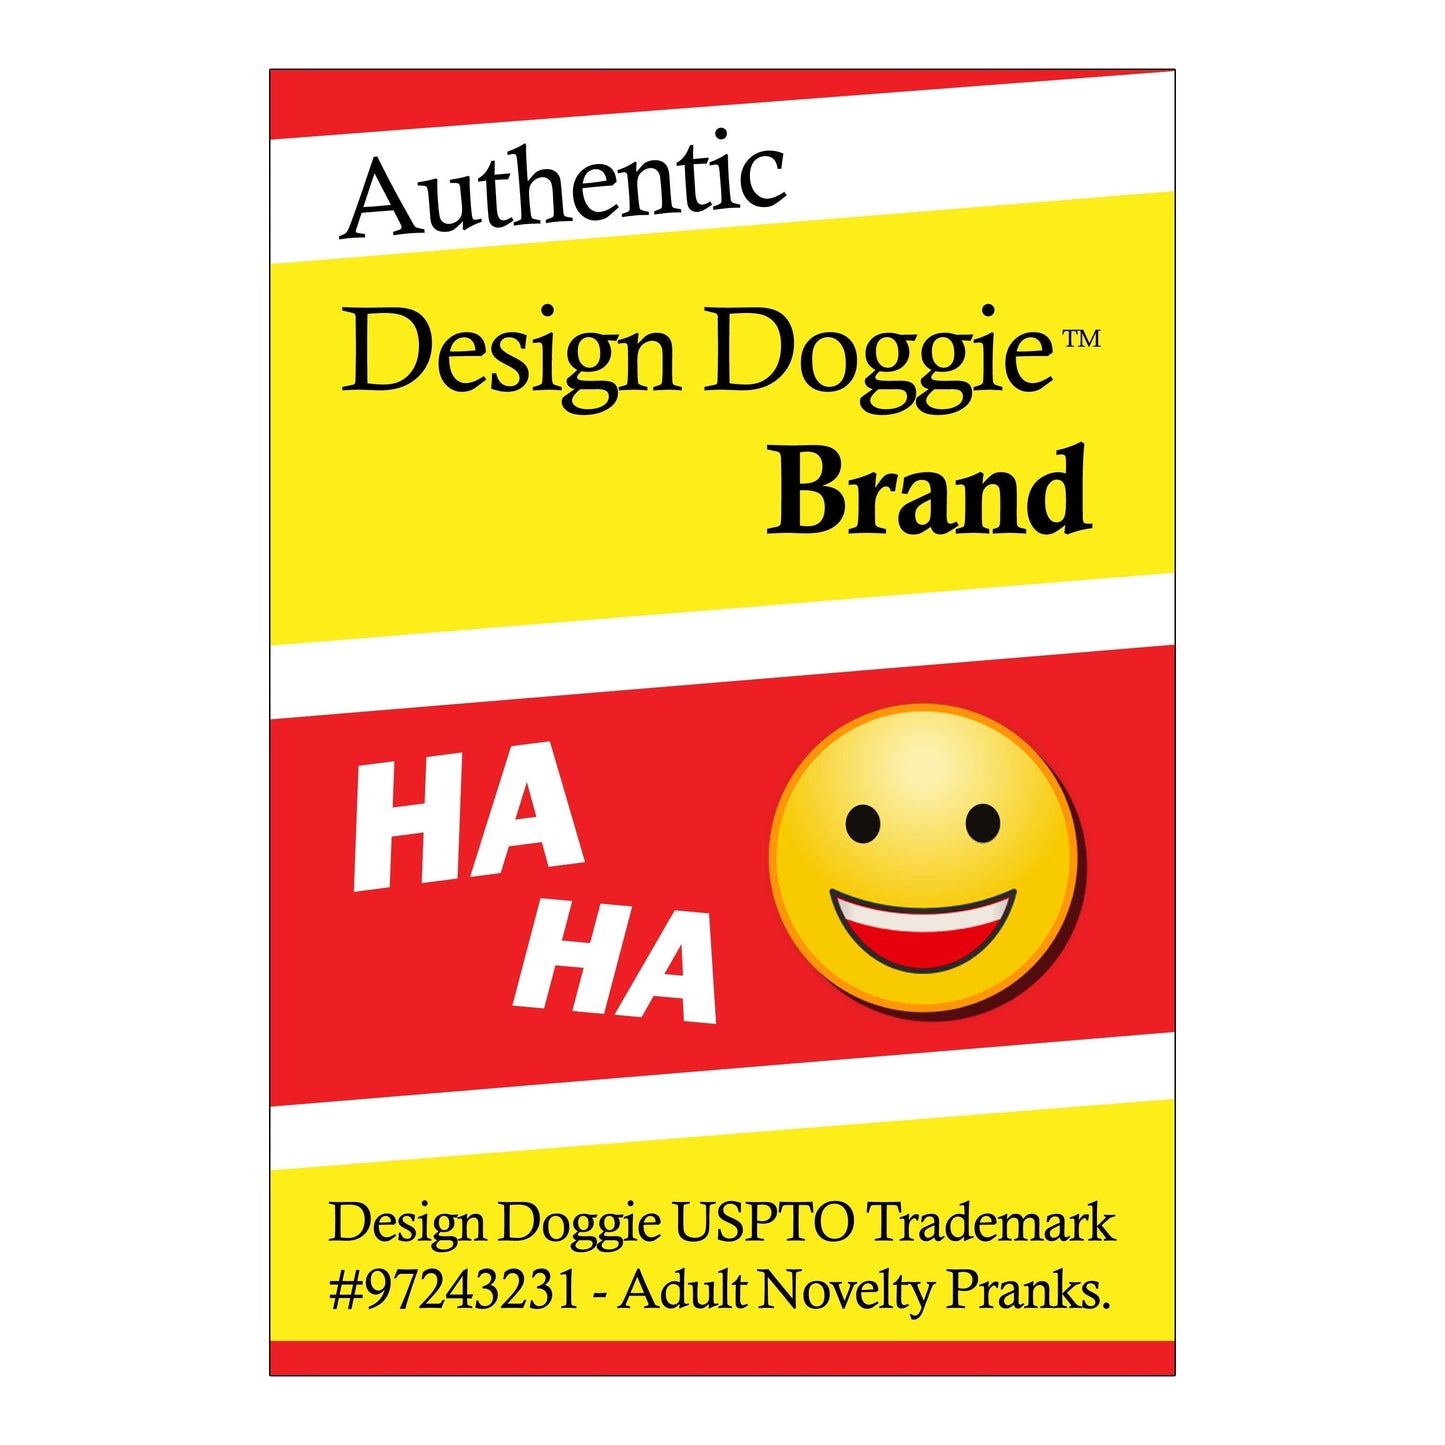 Double Middle Finger Design Doggie Brand